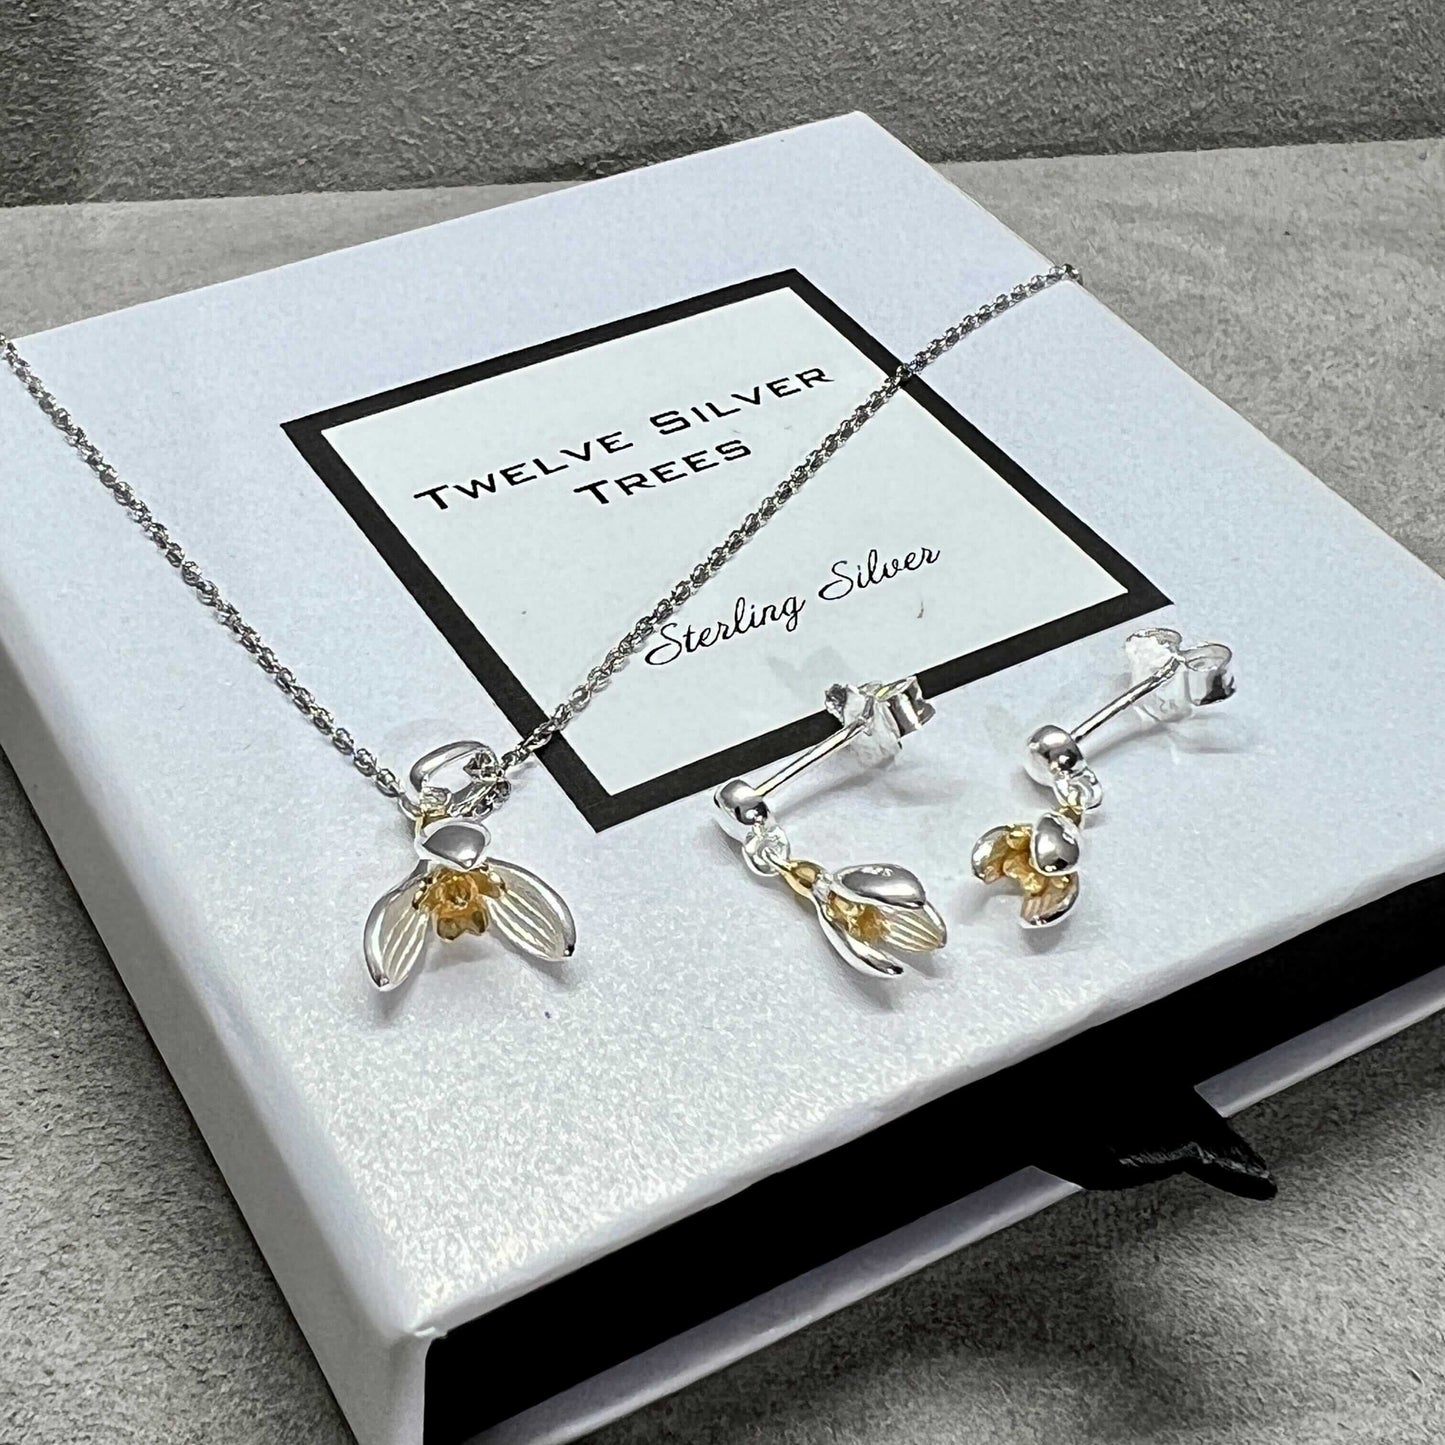 Snowdrop Drop Stud Earrings in Sterling Silver & 18 Carat Gold - Twelve Silver Trees